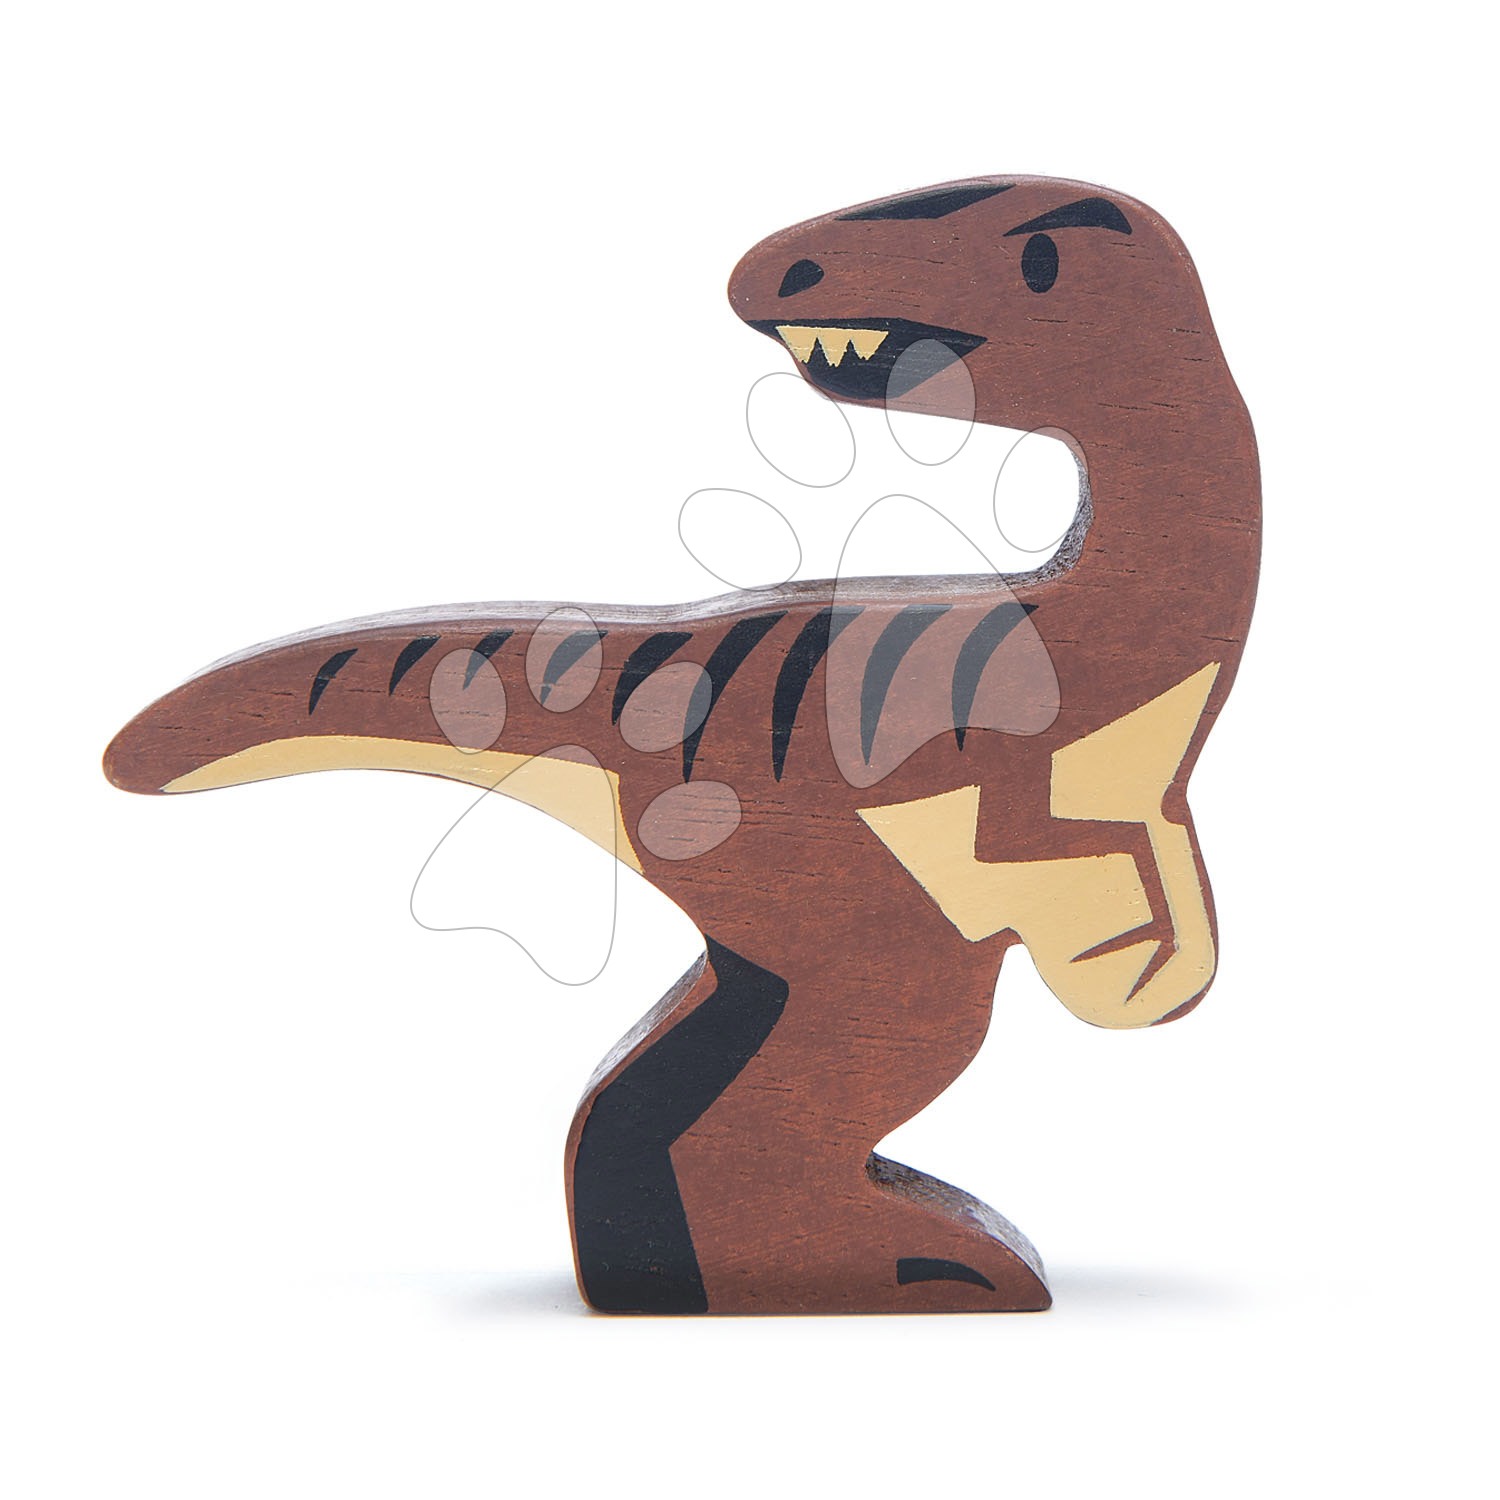 Drevený dinosaurus Velociraptor Tender Leaf Toys 